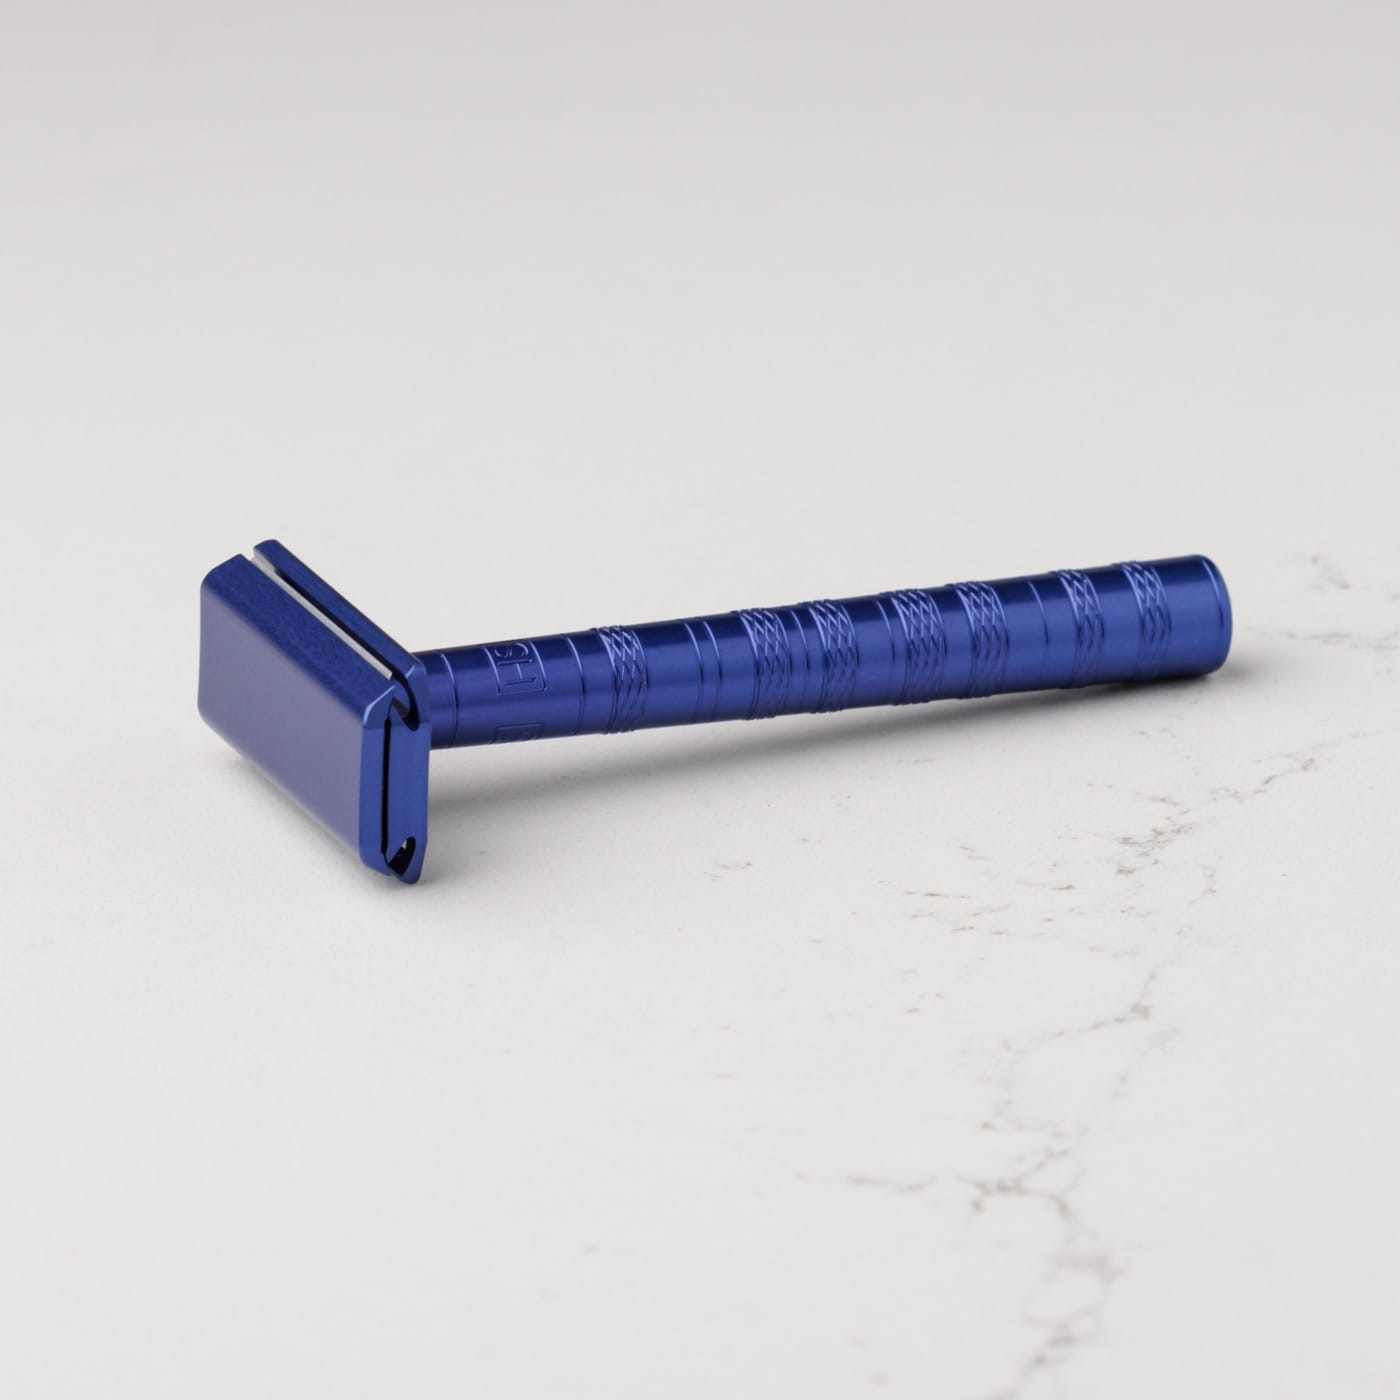 Henson Shaving Safety Razor AL13 Mild Steel Blue - 1.3 - HS-914764